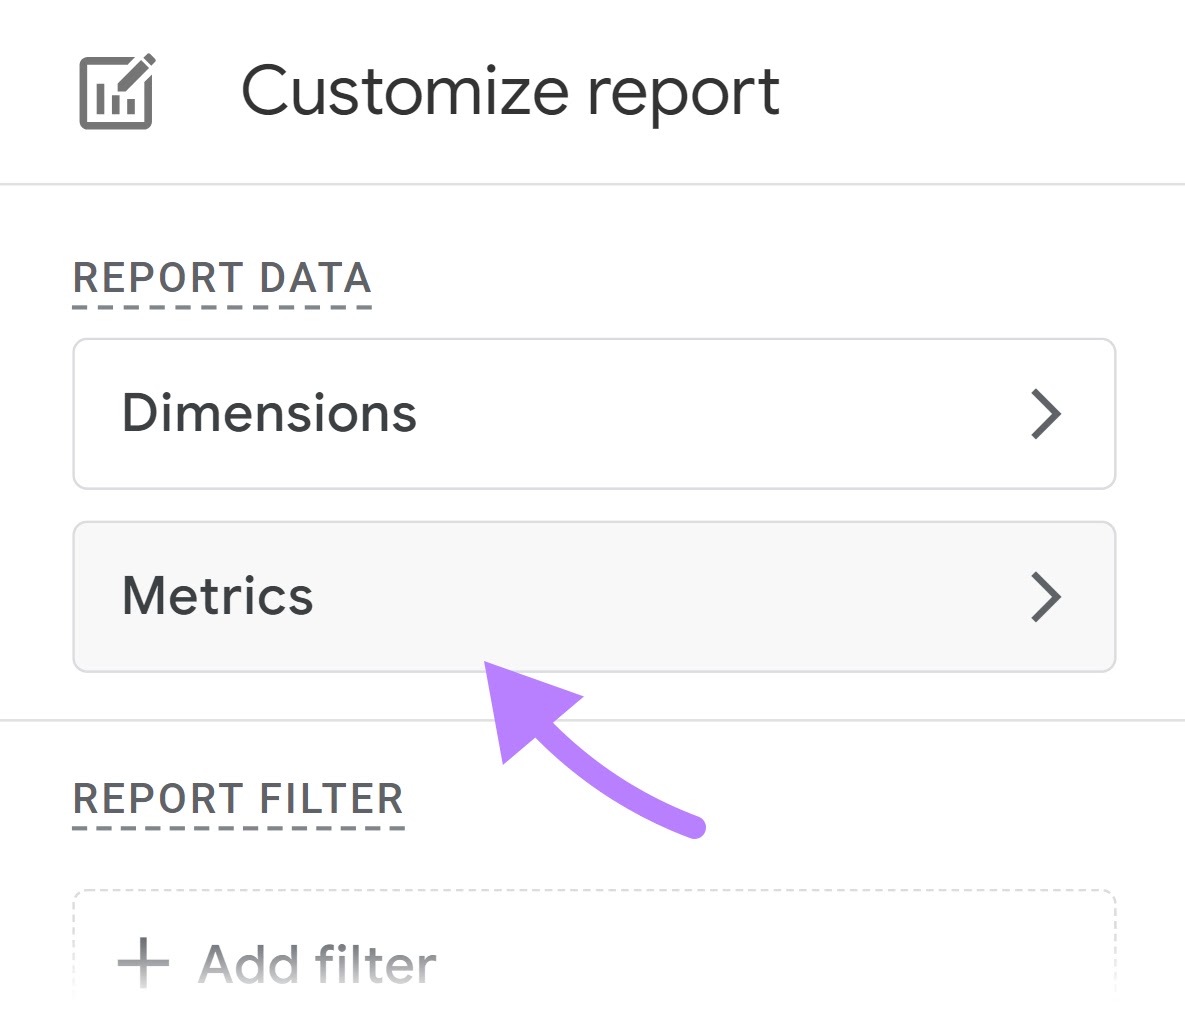 "Metrics" selected under "Customize report" window